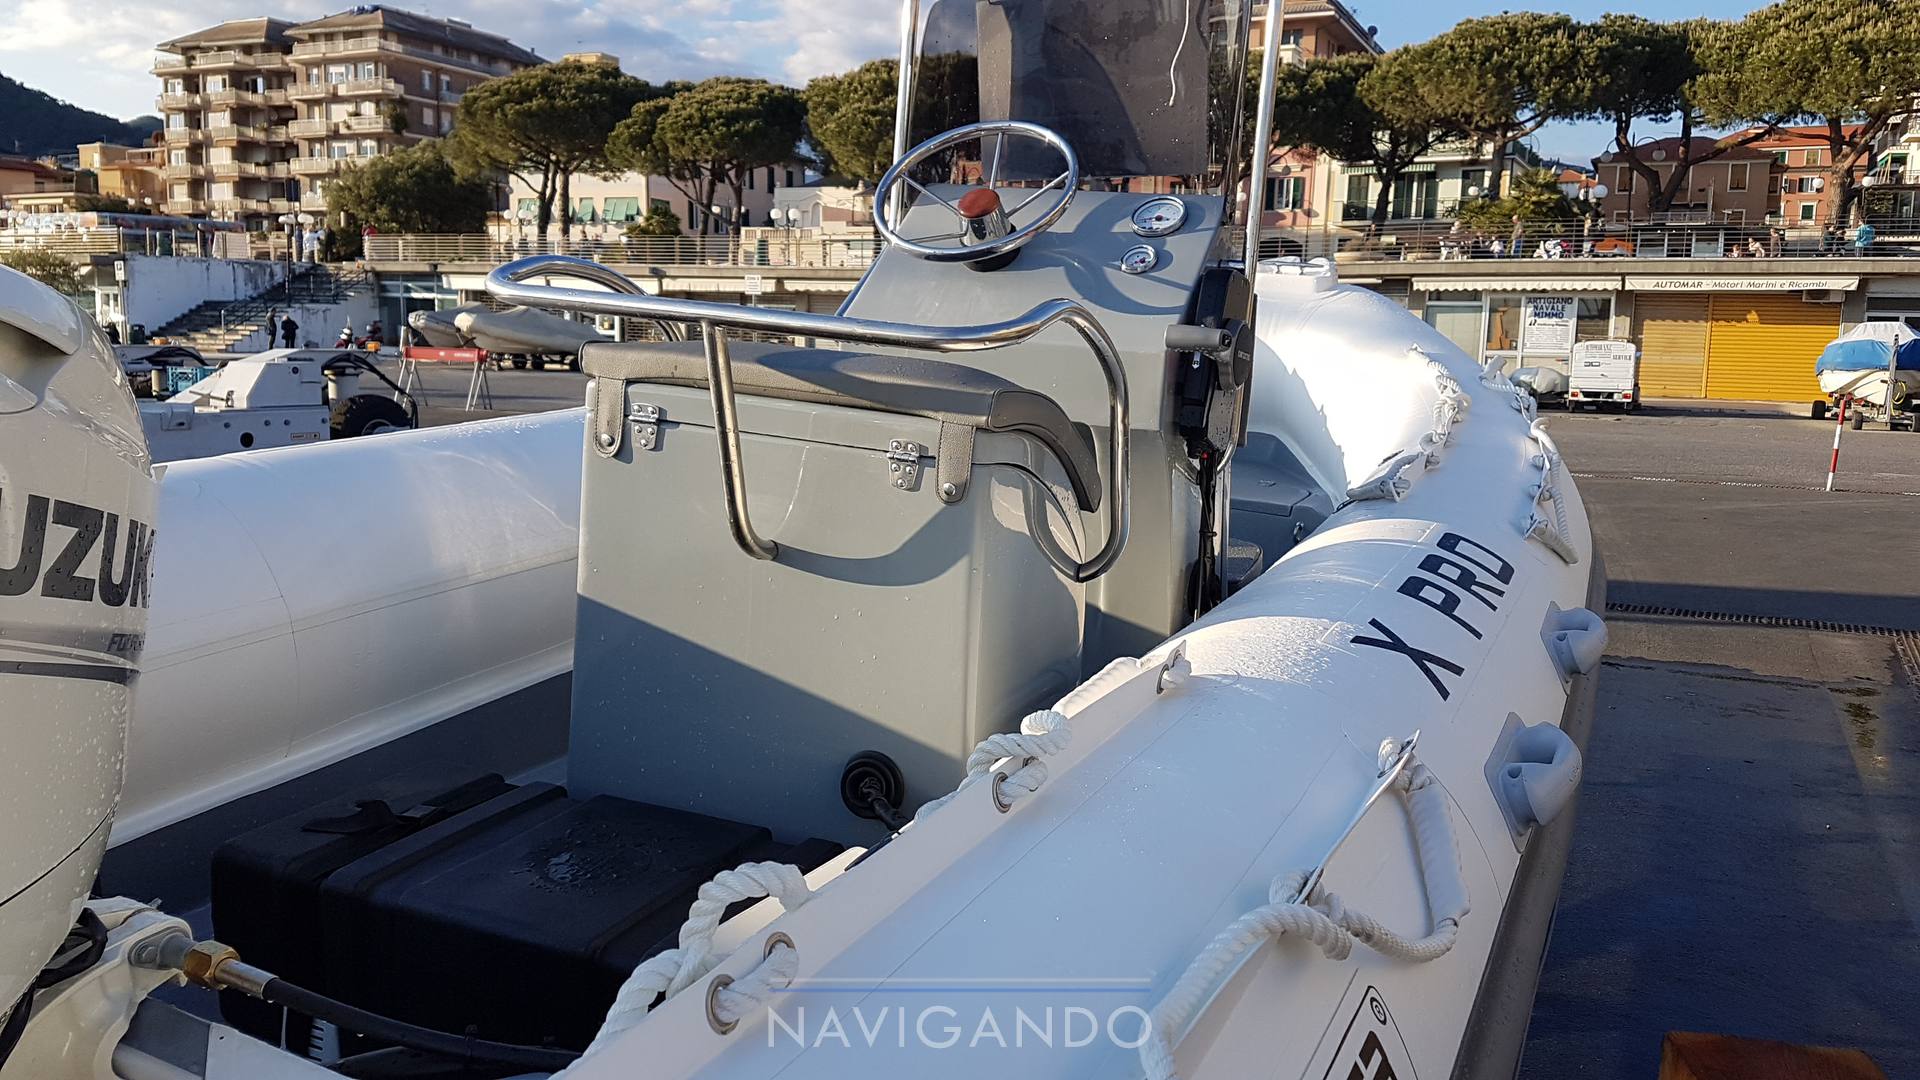 3d tender X pro 535 Motor boat new for sale